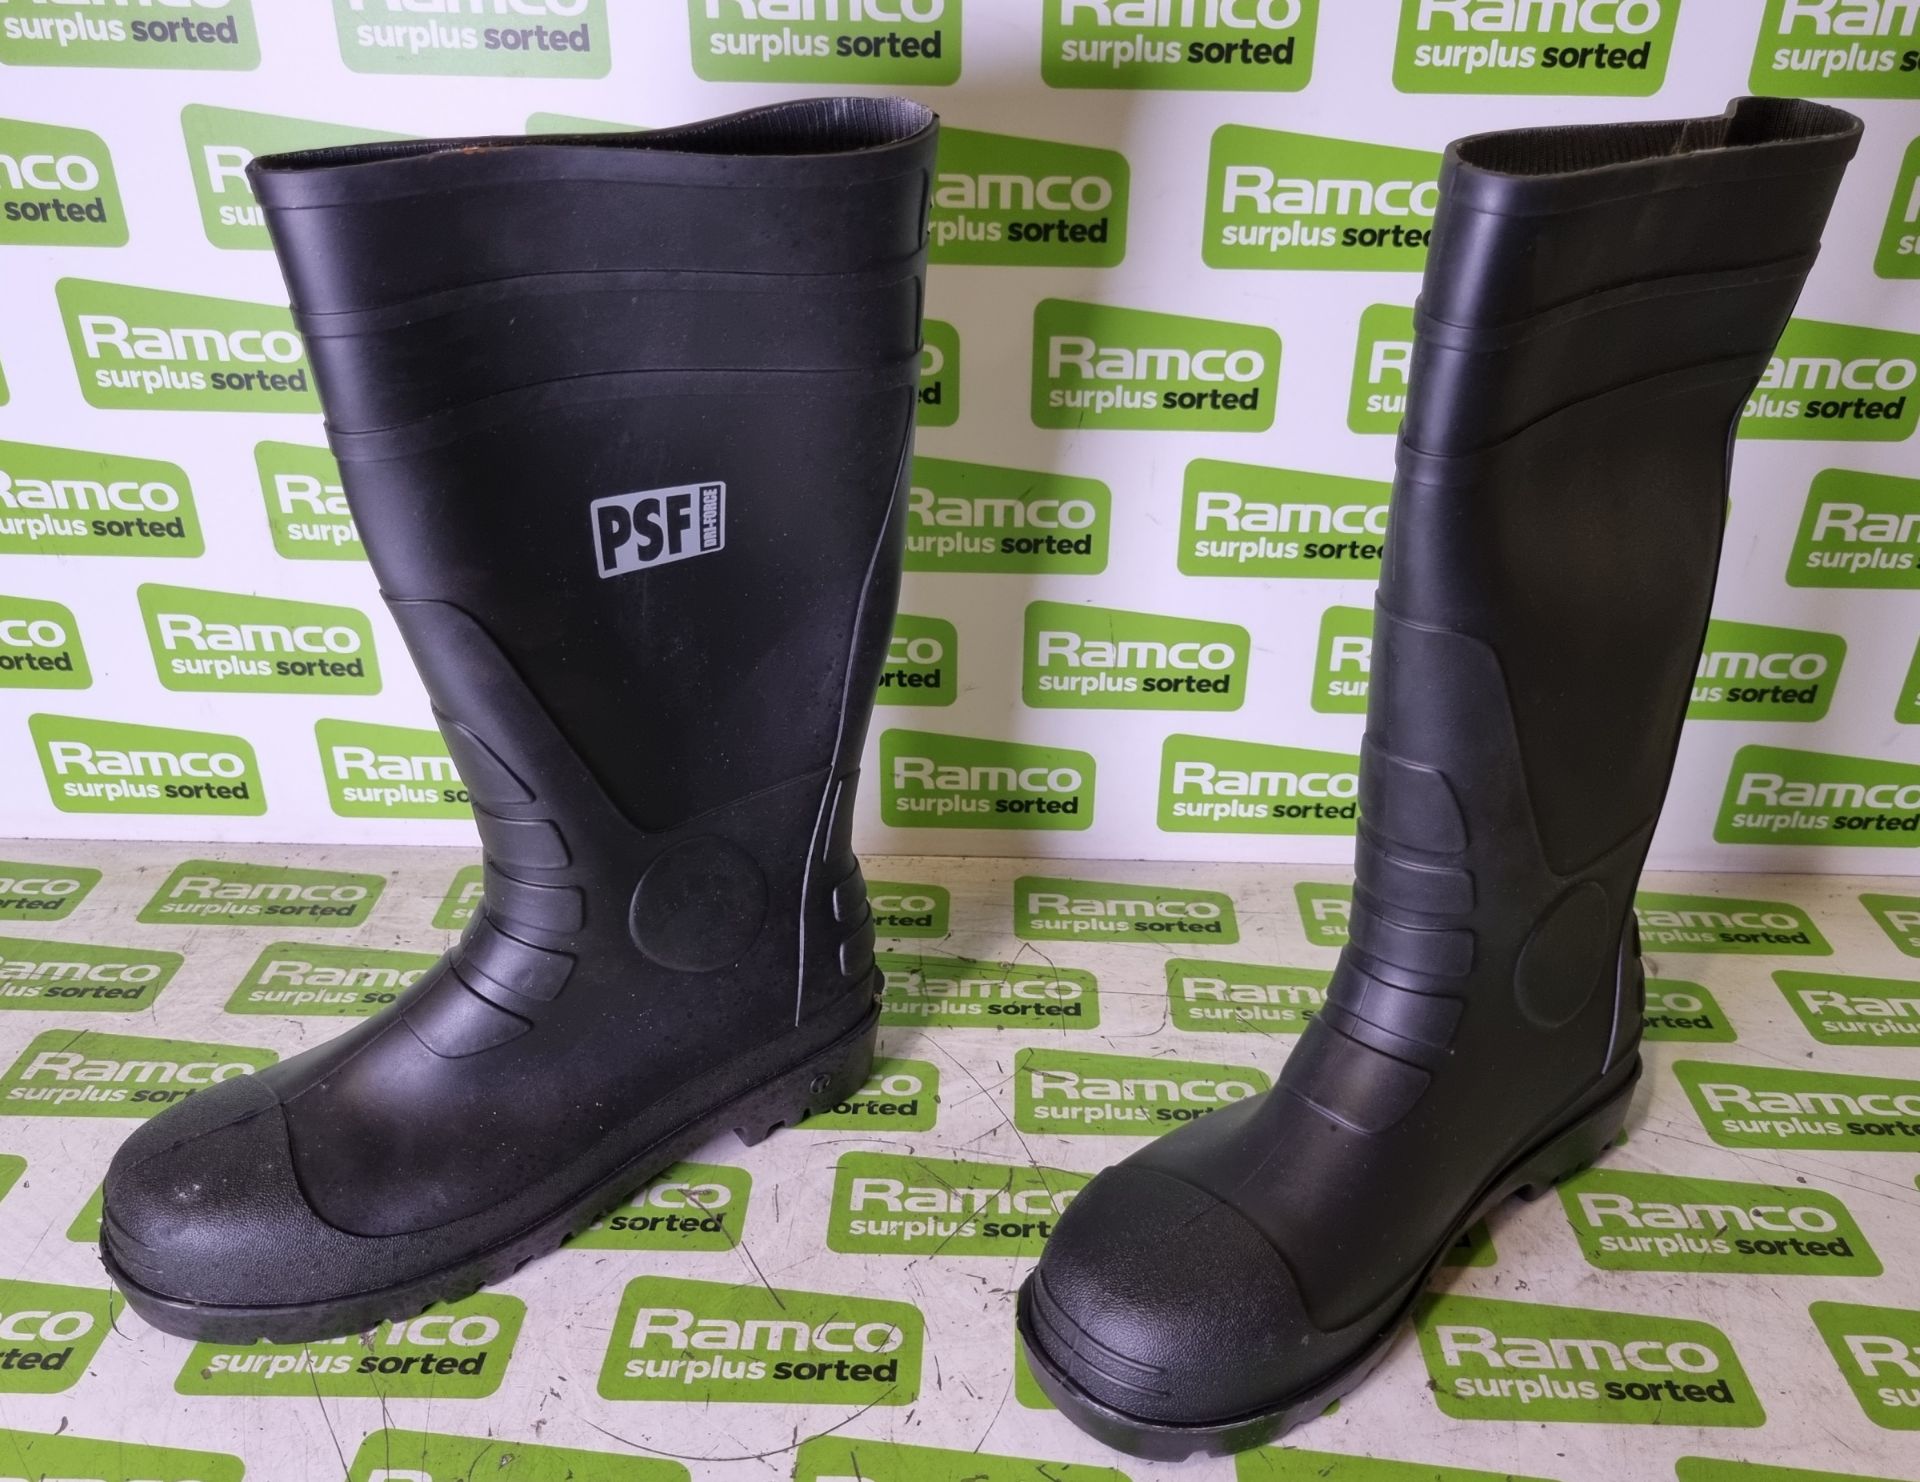 2x pairs of PSF Dri-Force black wellington boots - size: UK 9 - EU 43 - Image 2 of 4